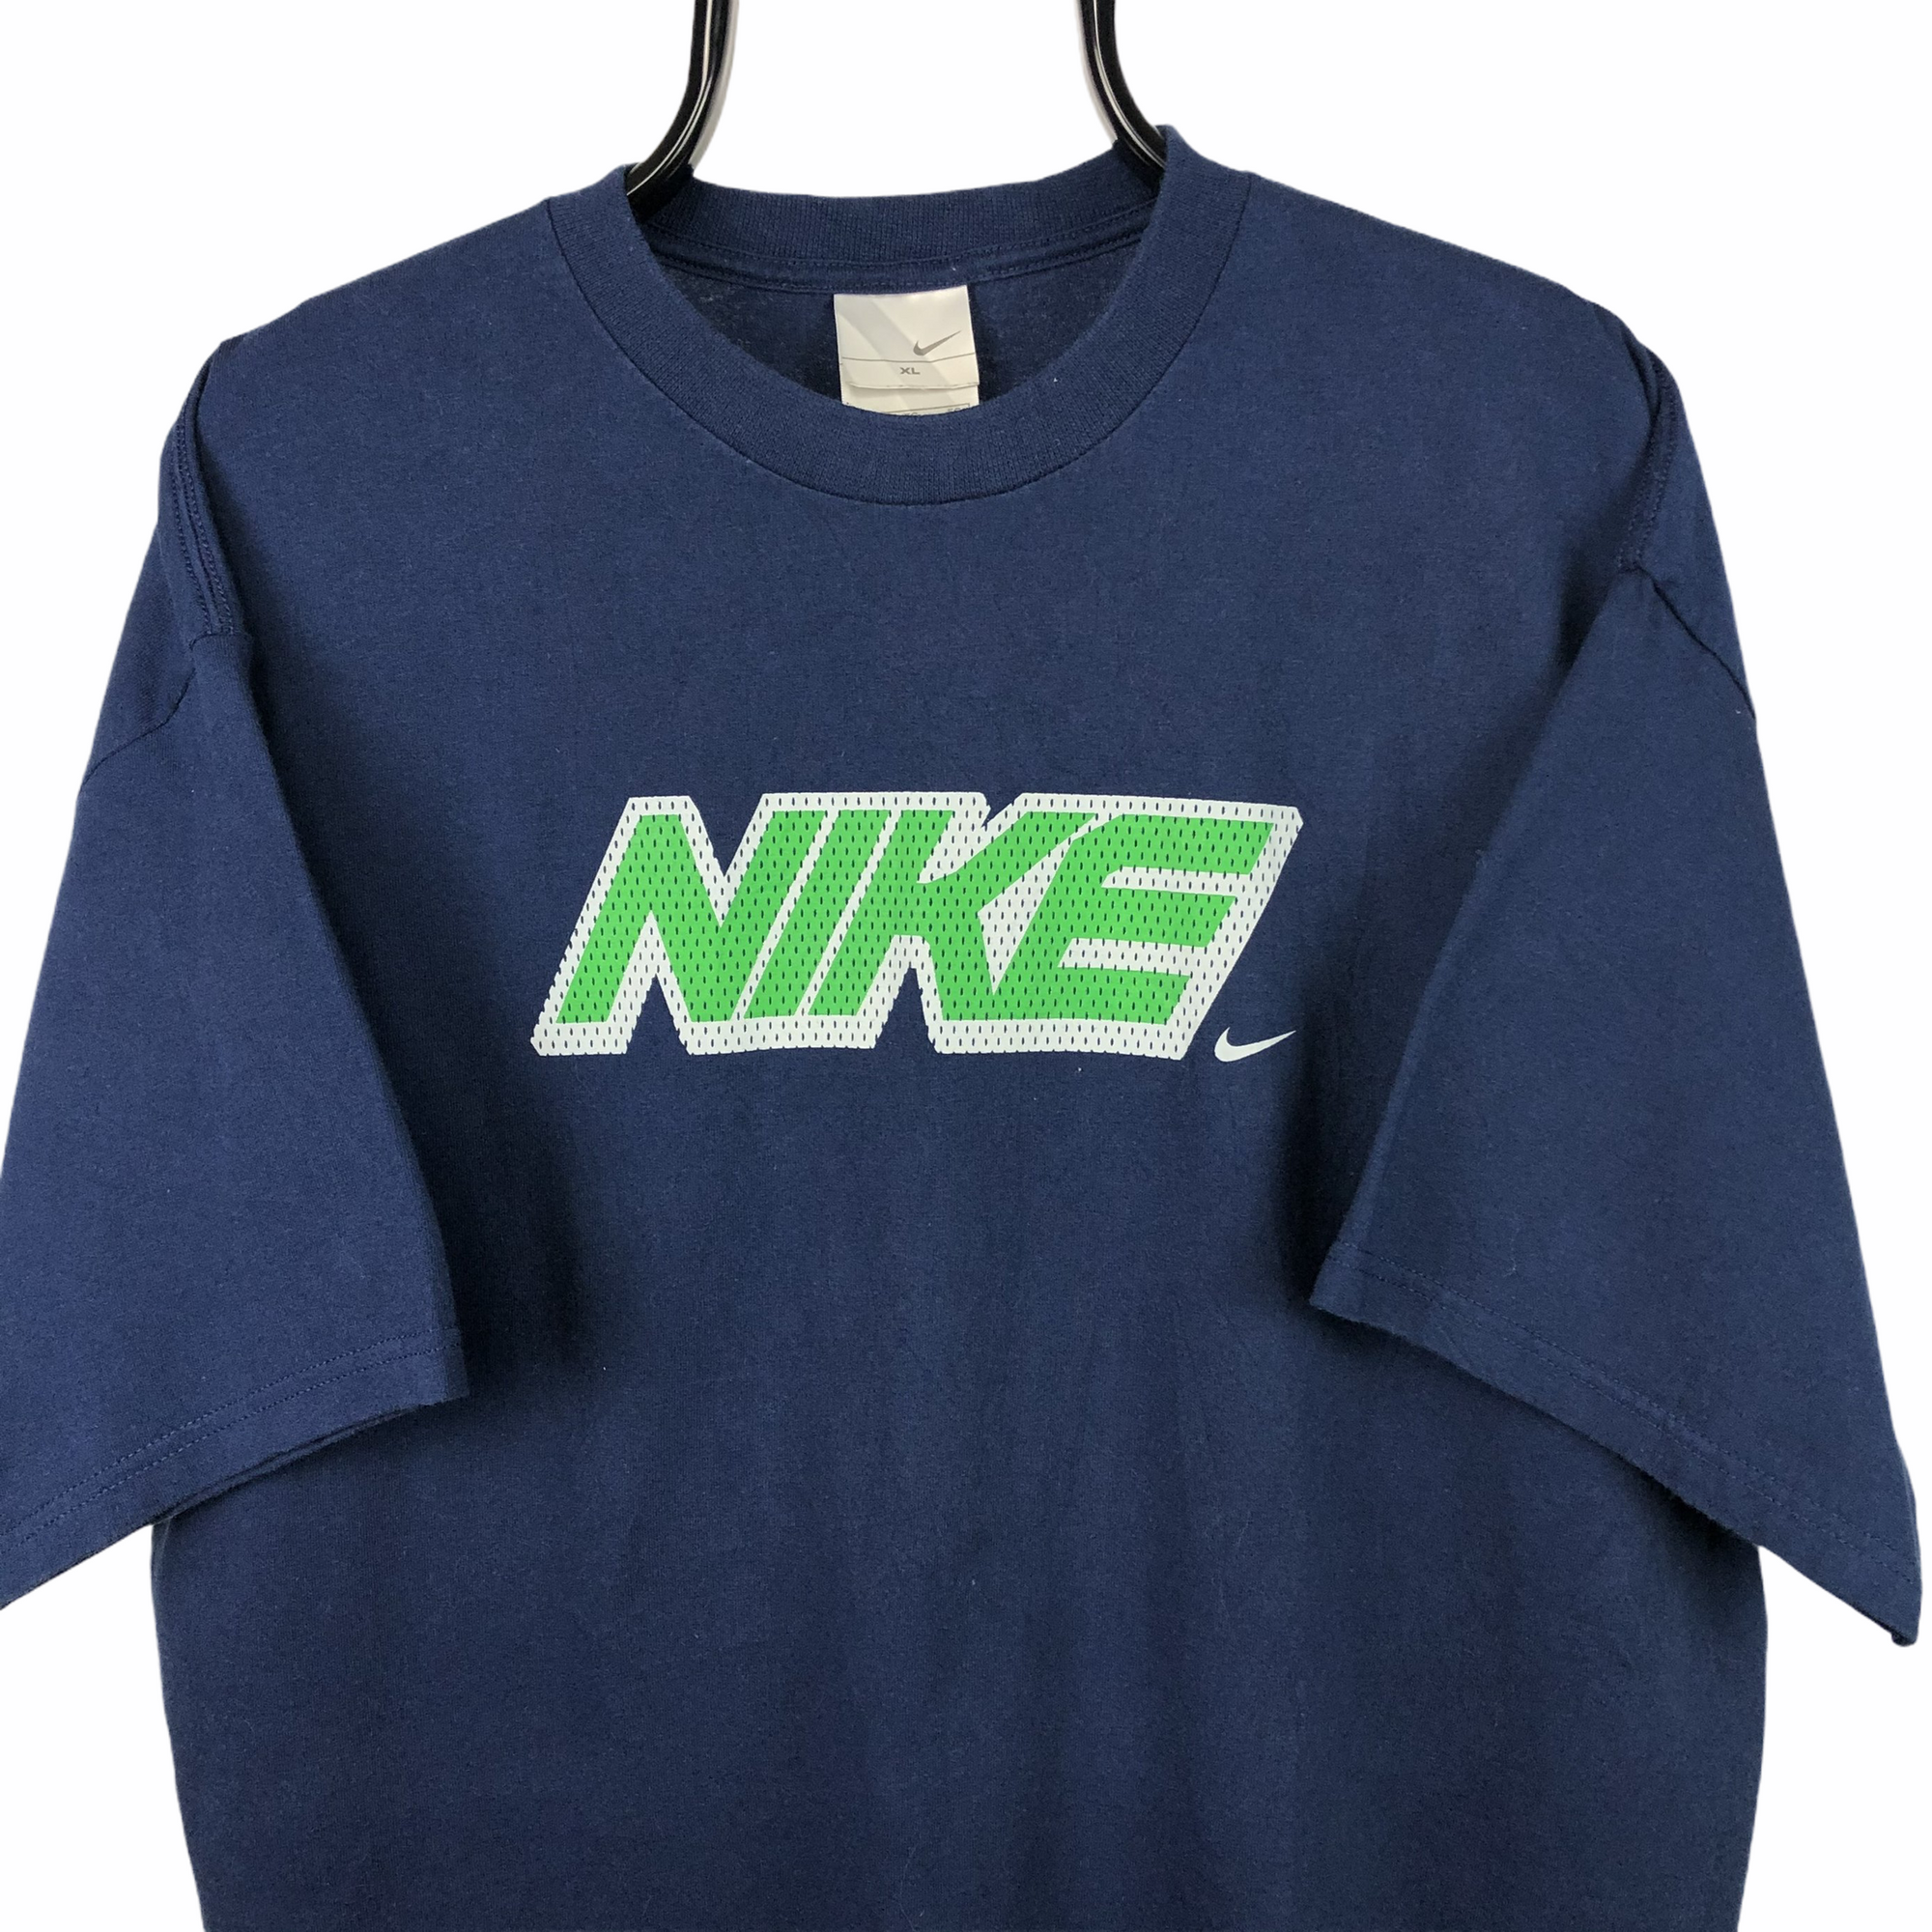 Vintage 90s Nike Spellout Tee in Navy & Green - Men's XL/Women's XXL